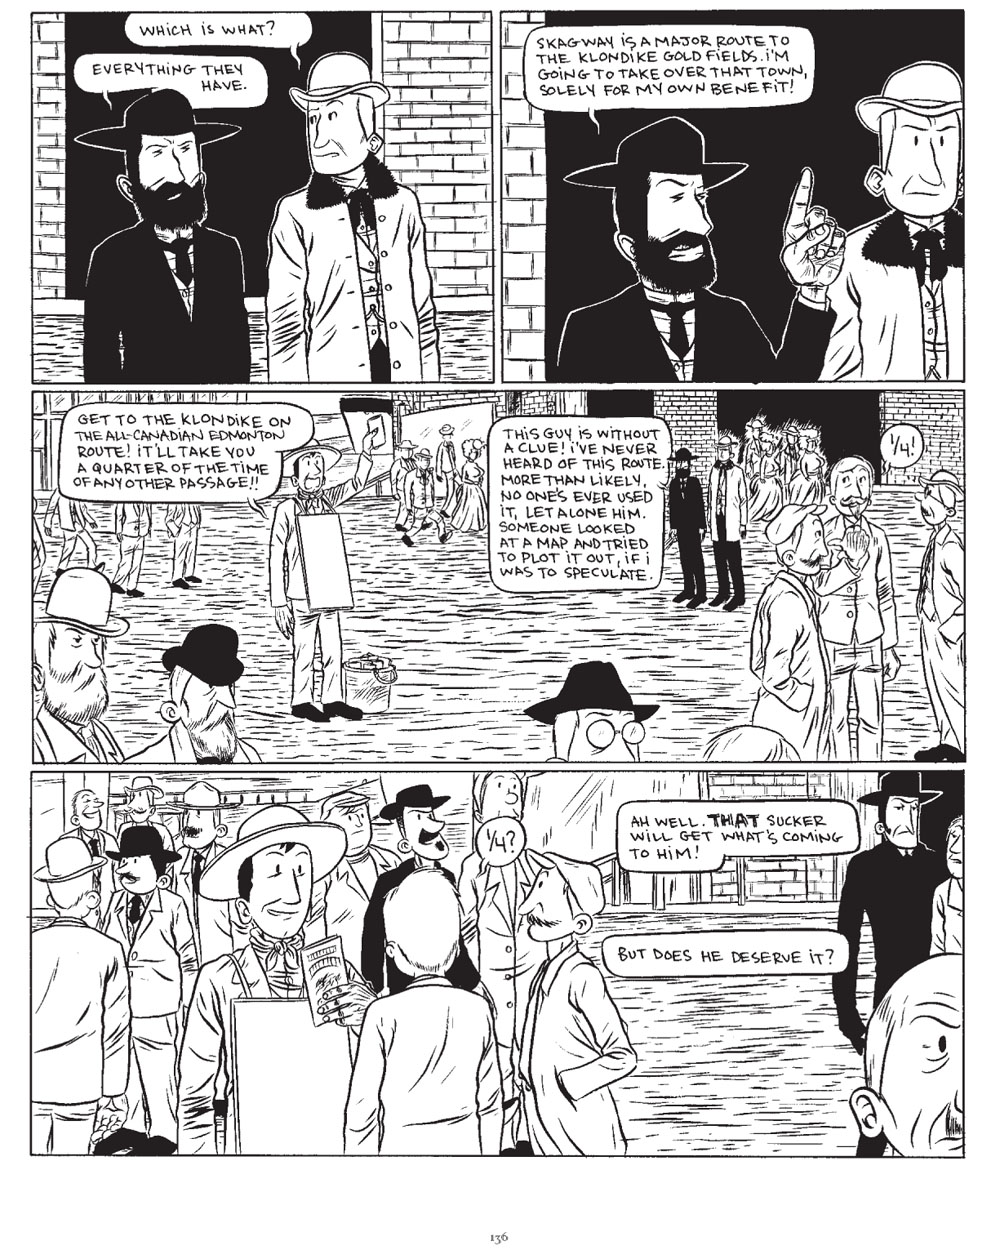 The Klondike Page 136